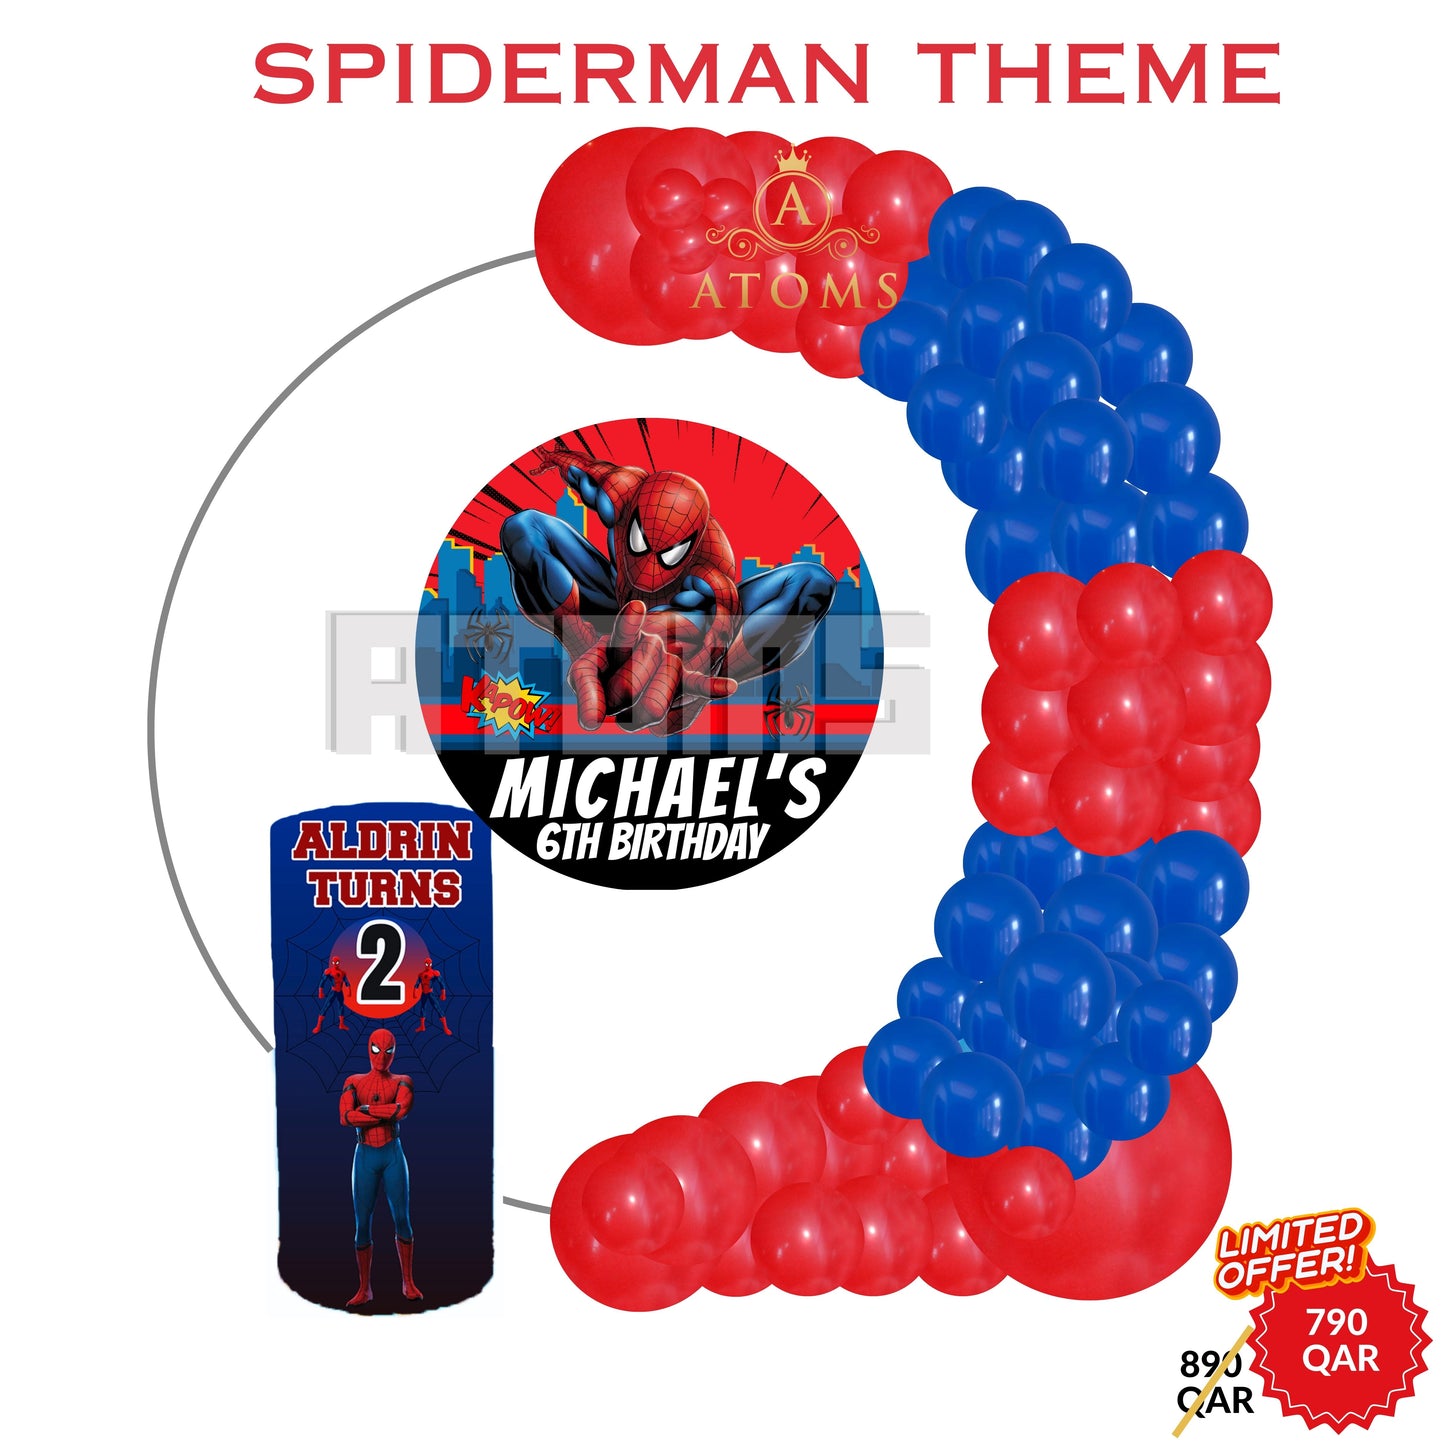 Spider man Theme Setup